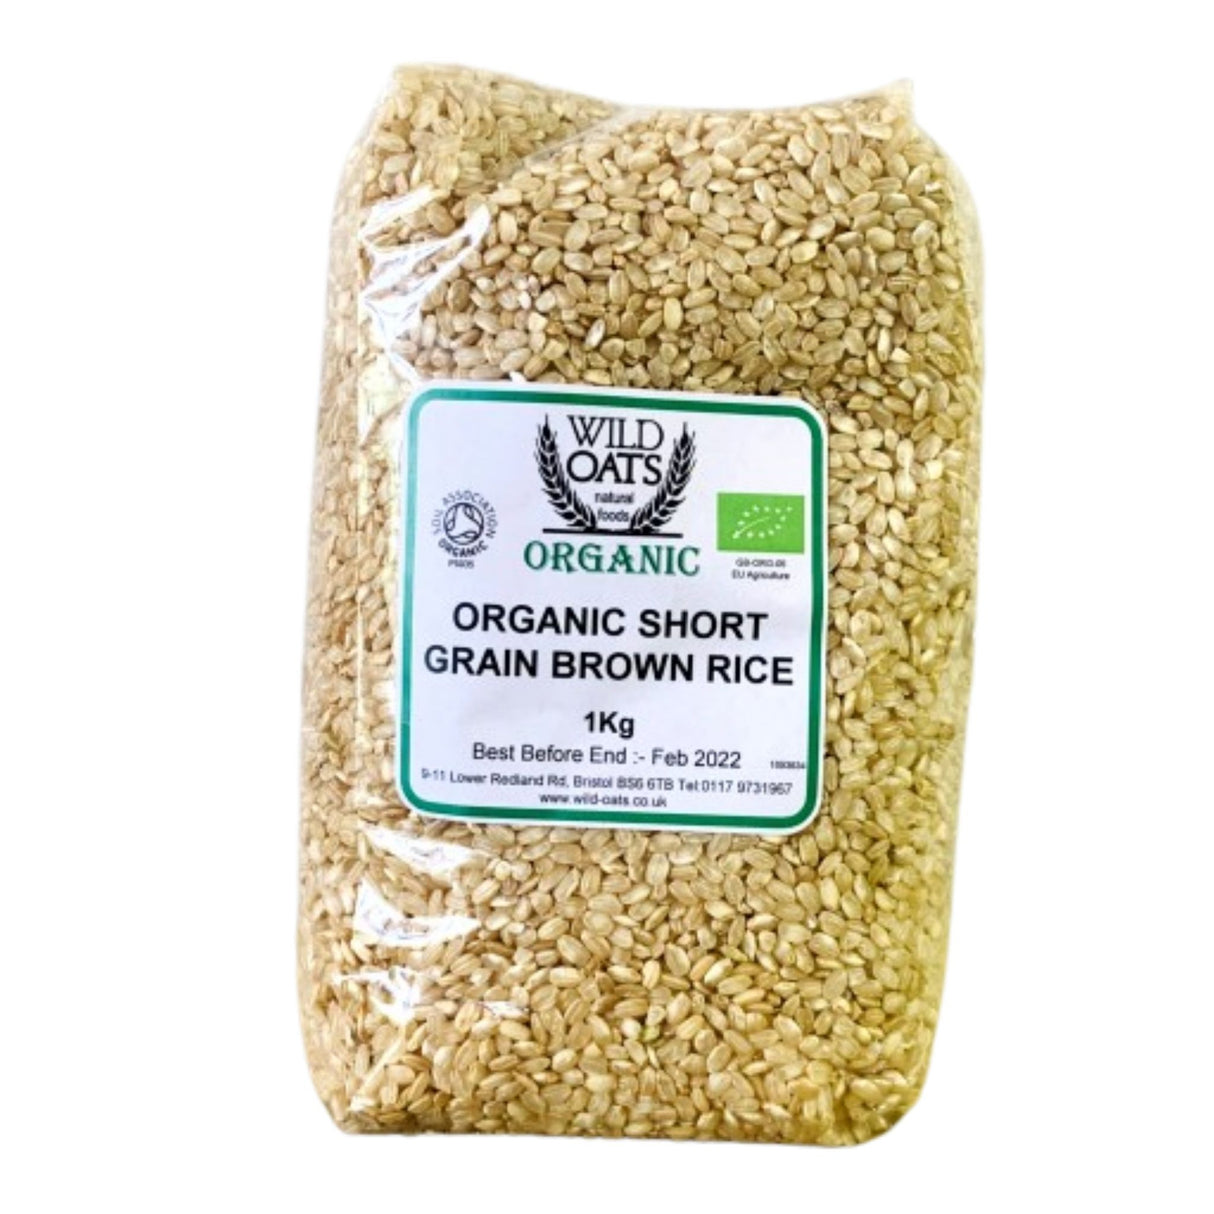 Wild Oats Organic Short Grain Brown Rice 1kg